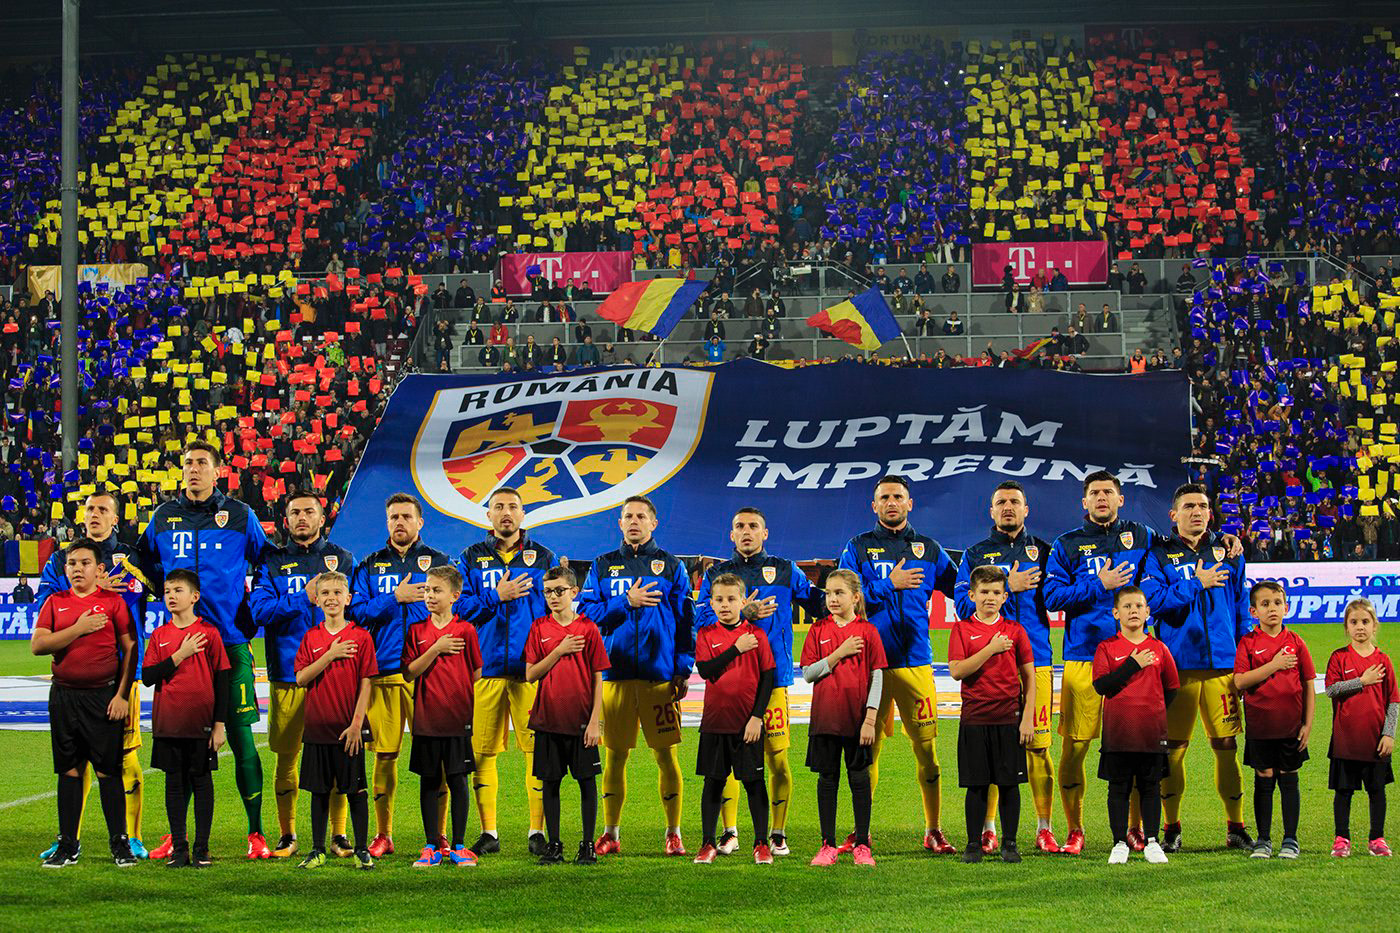 romania football branding  soccer Joma EURO 2020 world cup rebranding HAI ROMANIA LUPTAM IMPREUNA